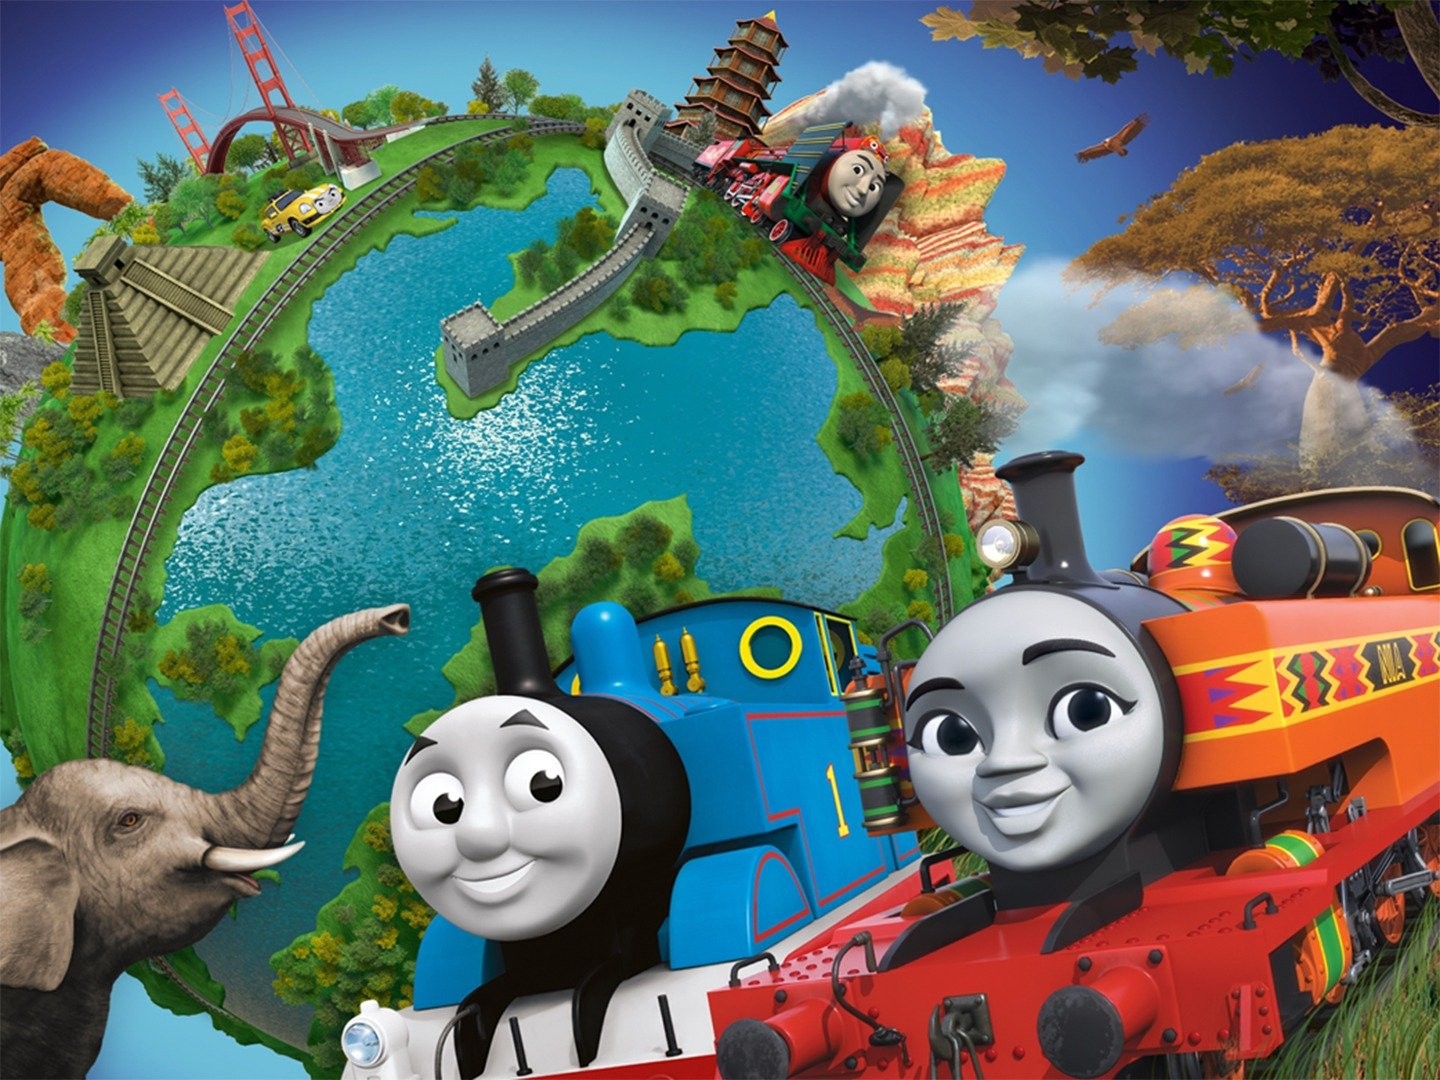 Thomas & Friends: Big World! Big Adventures! The Movie - Rotten Tomatoes